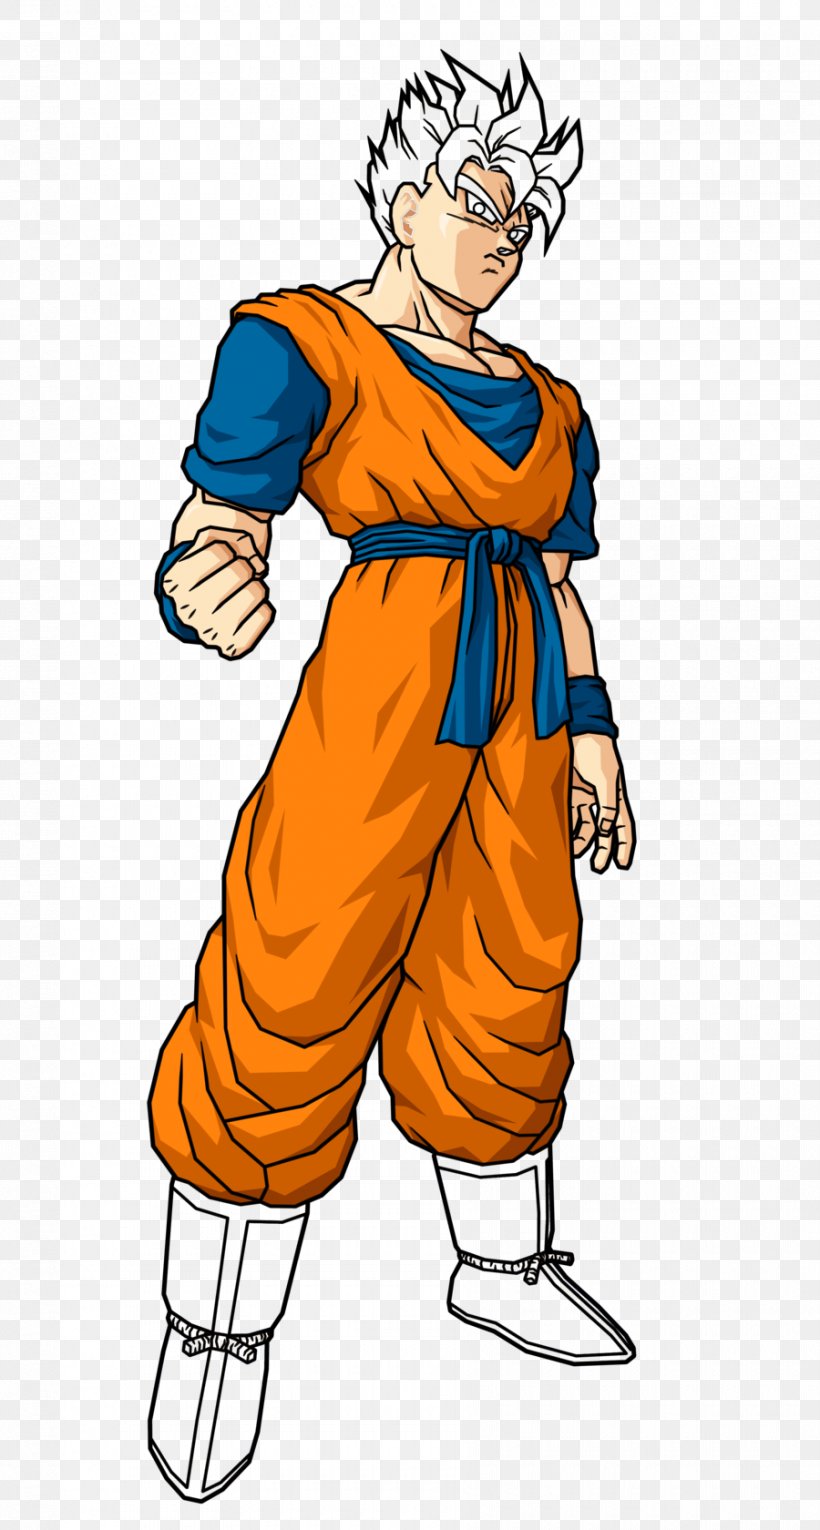 Vegeta Goku Gohan Trunks Dragon Ball Xenoverse 2, dragon ball z, human,  cartoon png